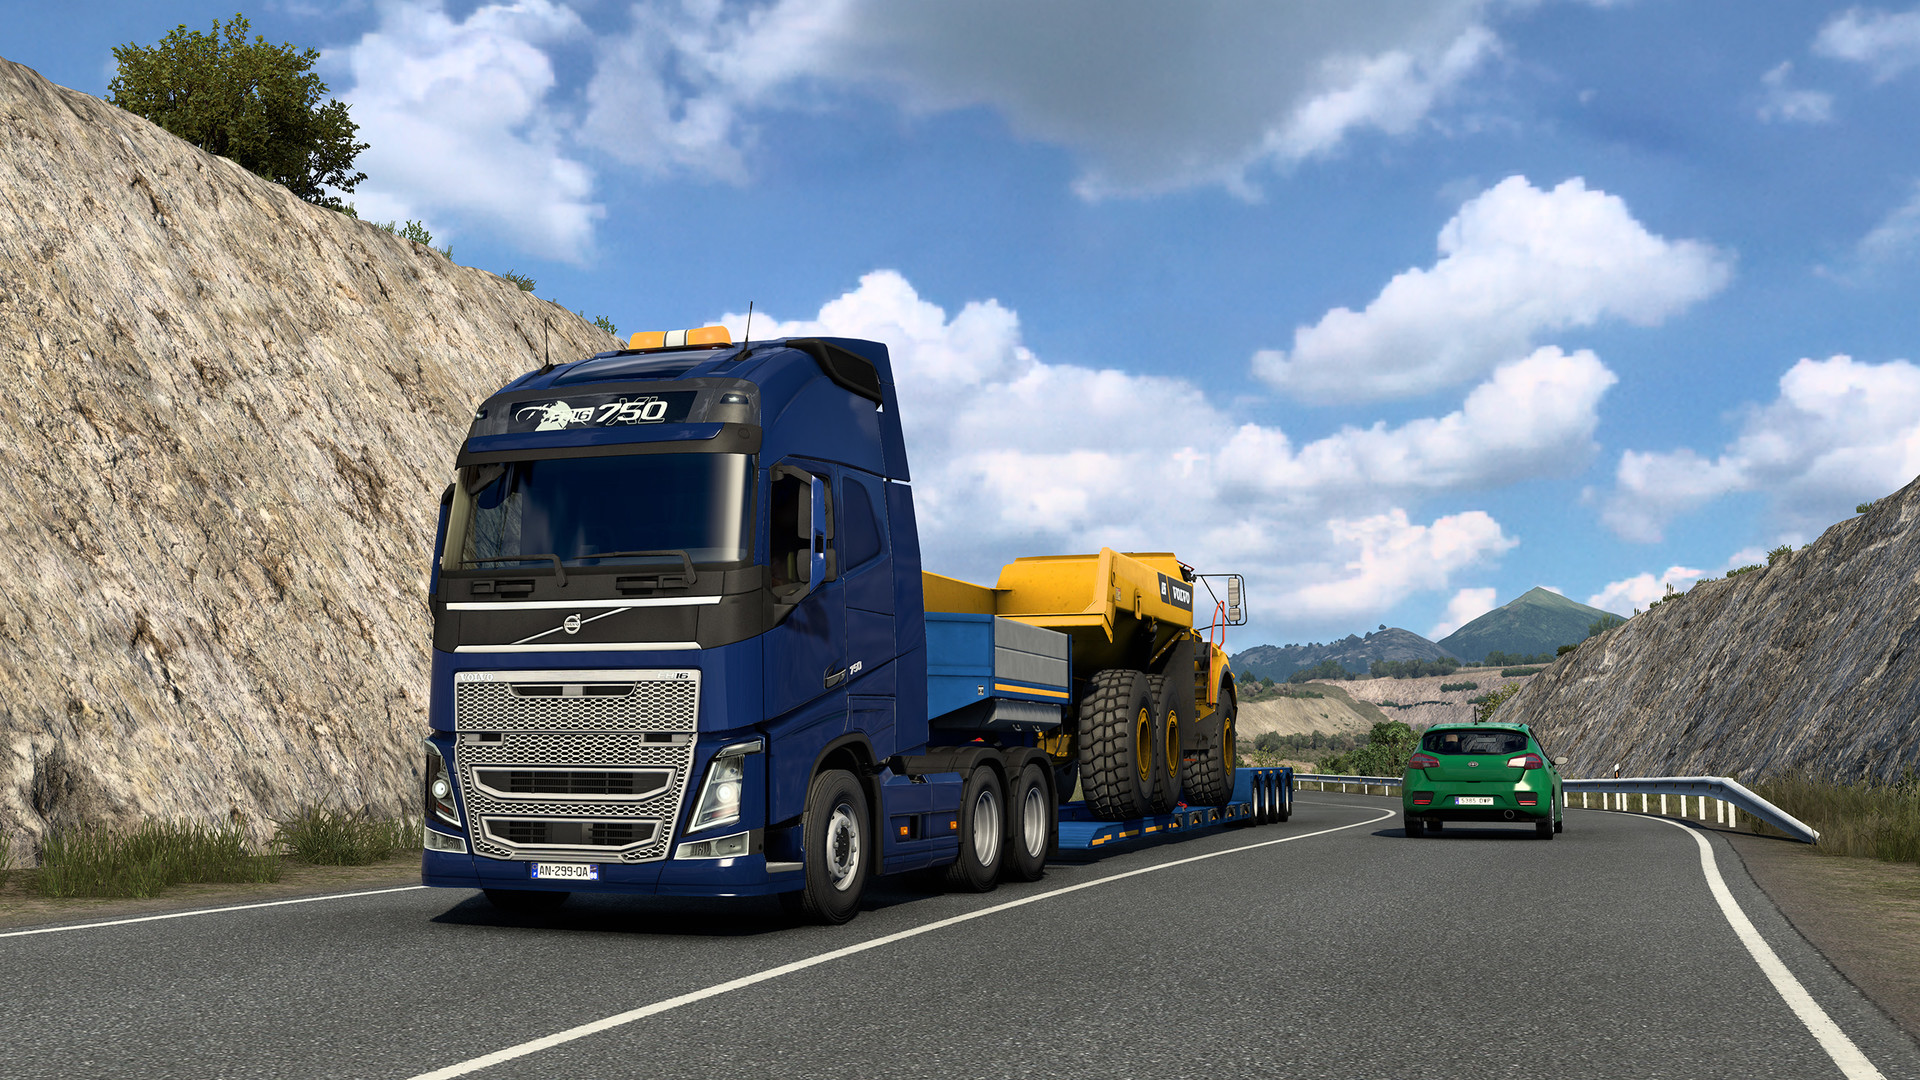 Euro Truck Simulator 2 - Volvo Construction Equipment DLC Steam Altergift